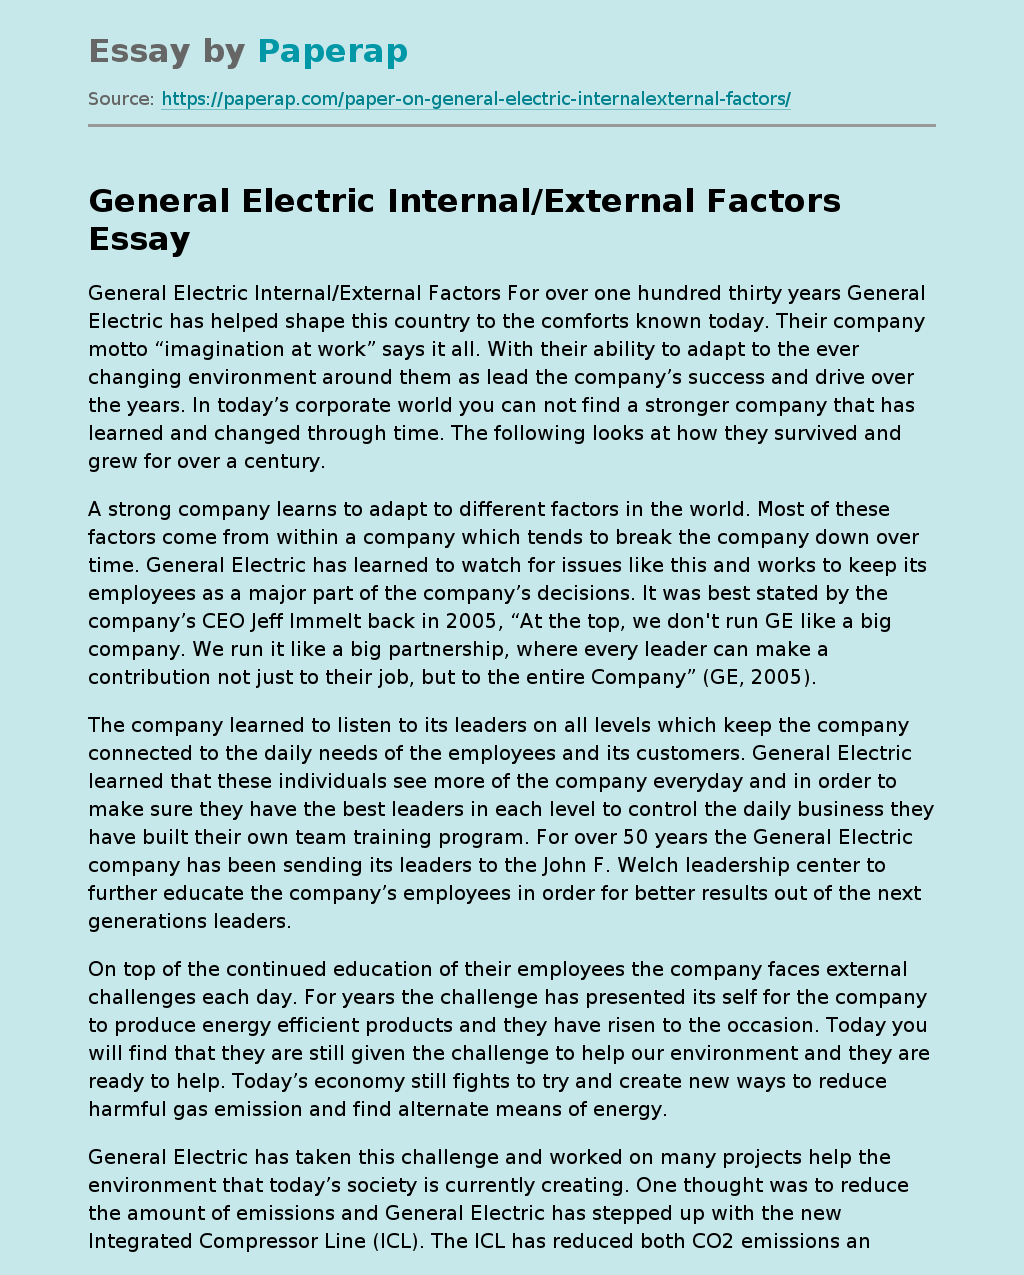 General Electric Internal/External Factors